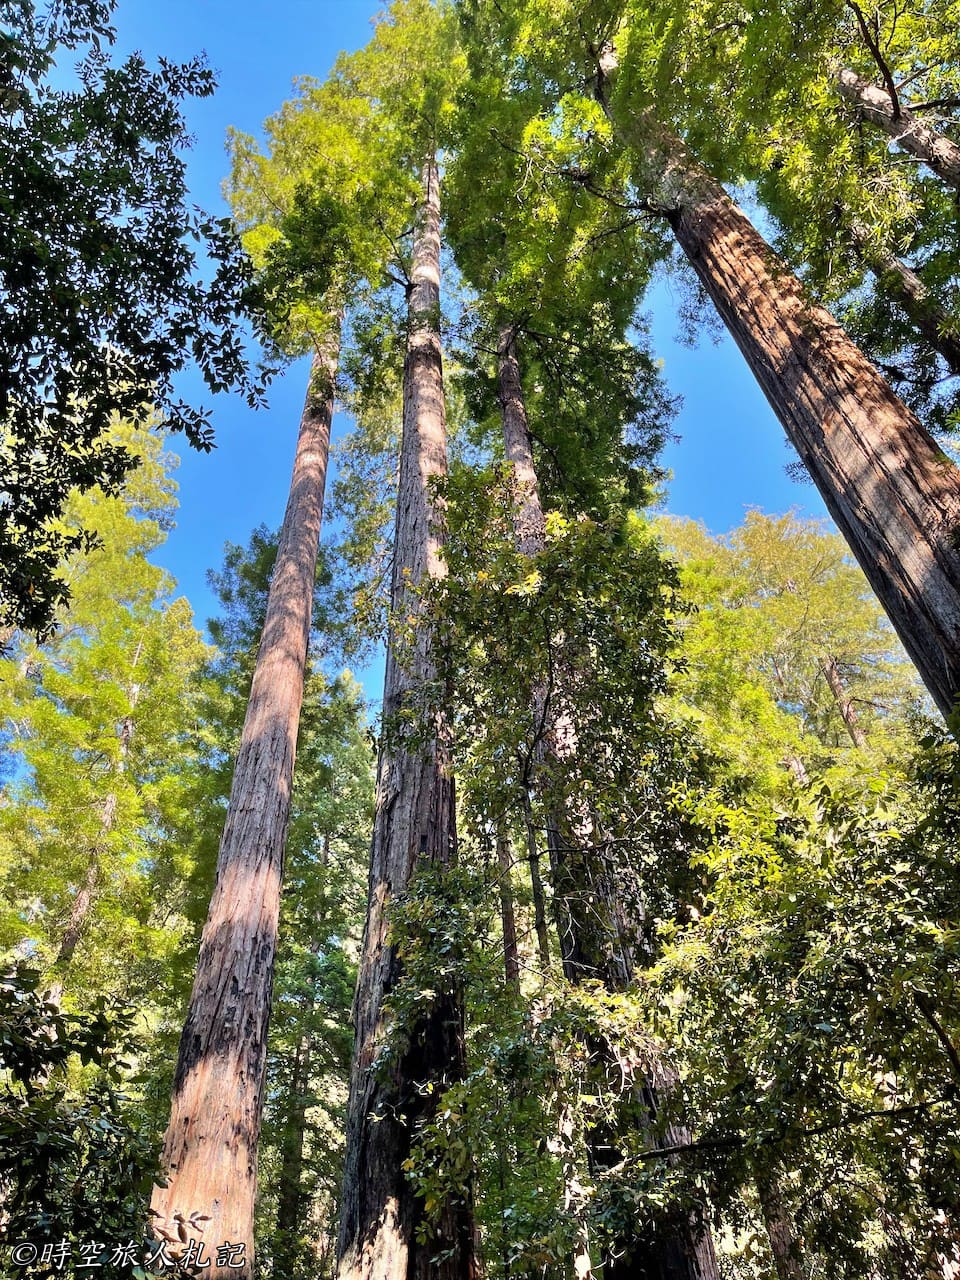 Portola redwood state park 16